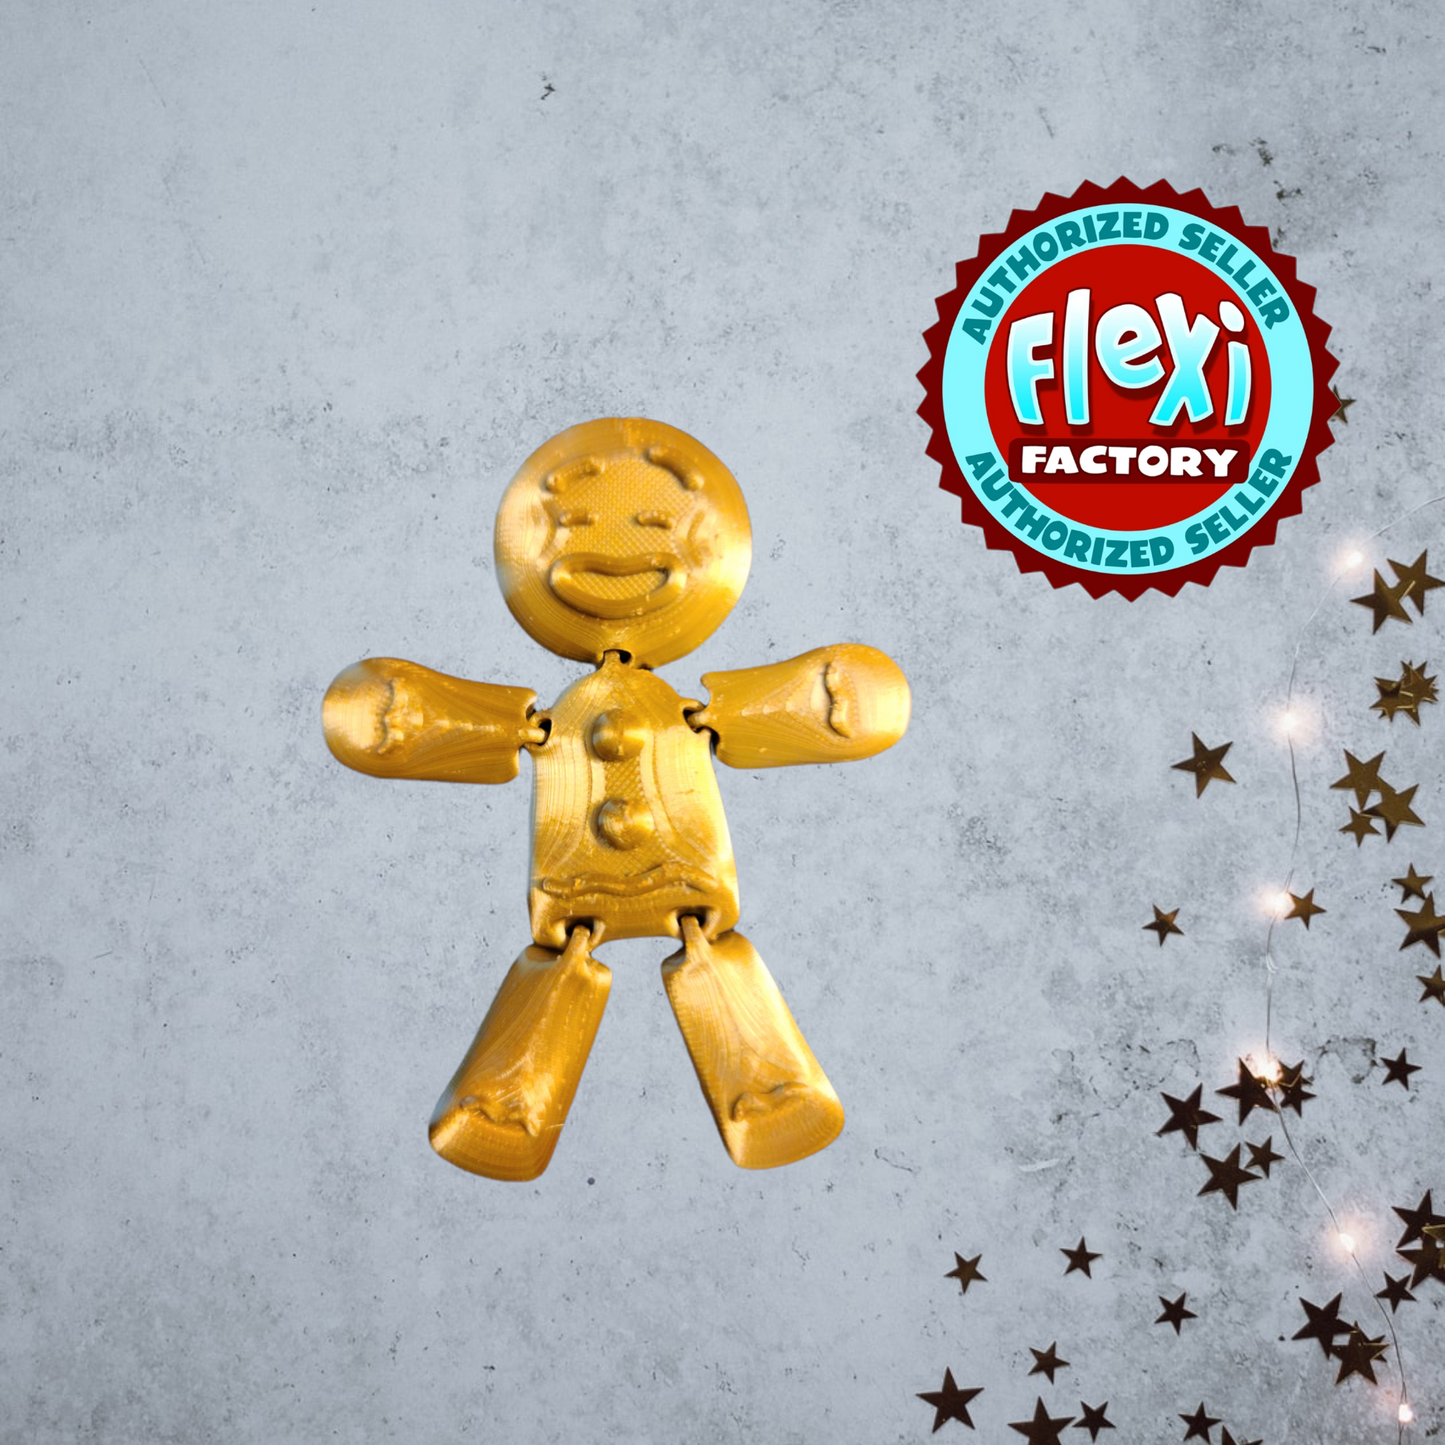 Gingerbread man, 3d print, christmas ornament, stocking stuffer, Christmas, holiday gift, 3d ornament, 3d gift, flexi factory, keepsake